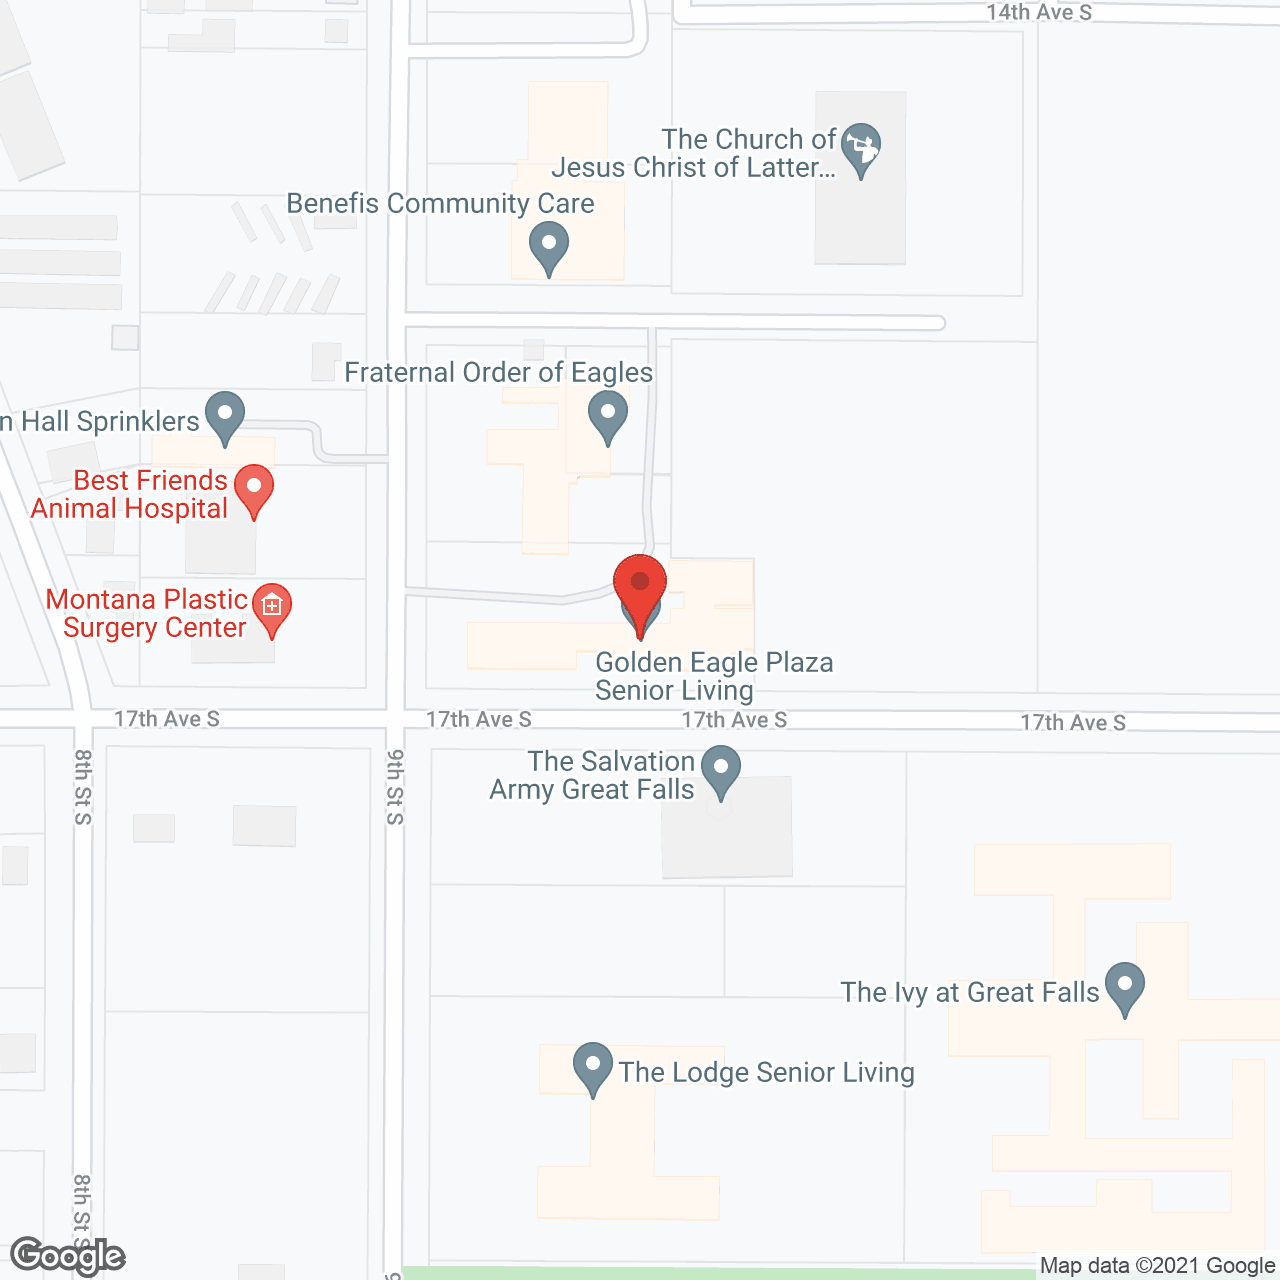 Golden Eagle Plaza in google map